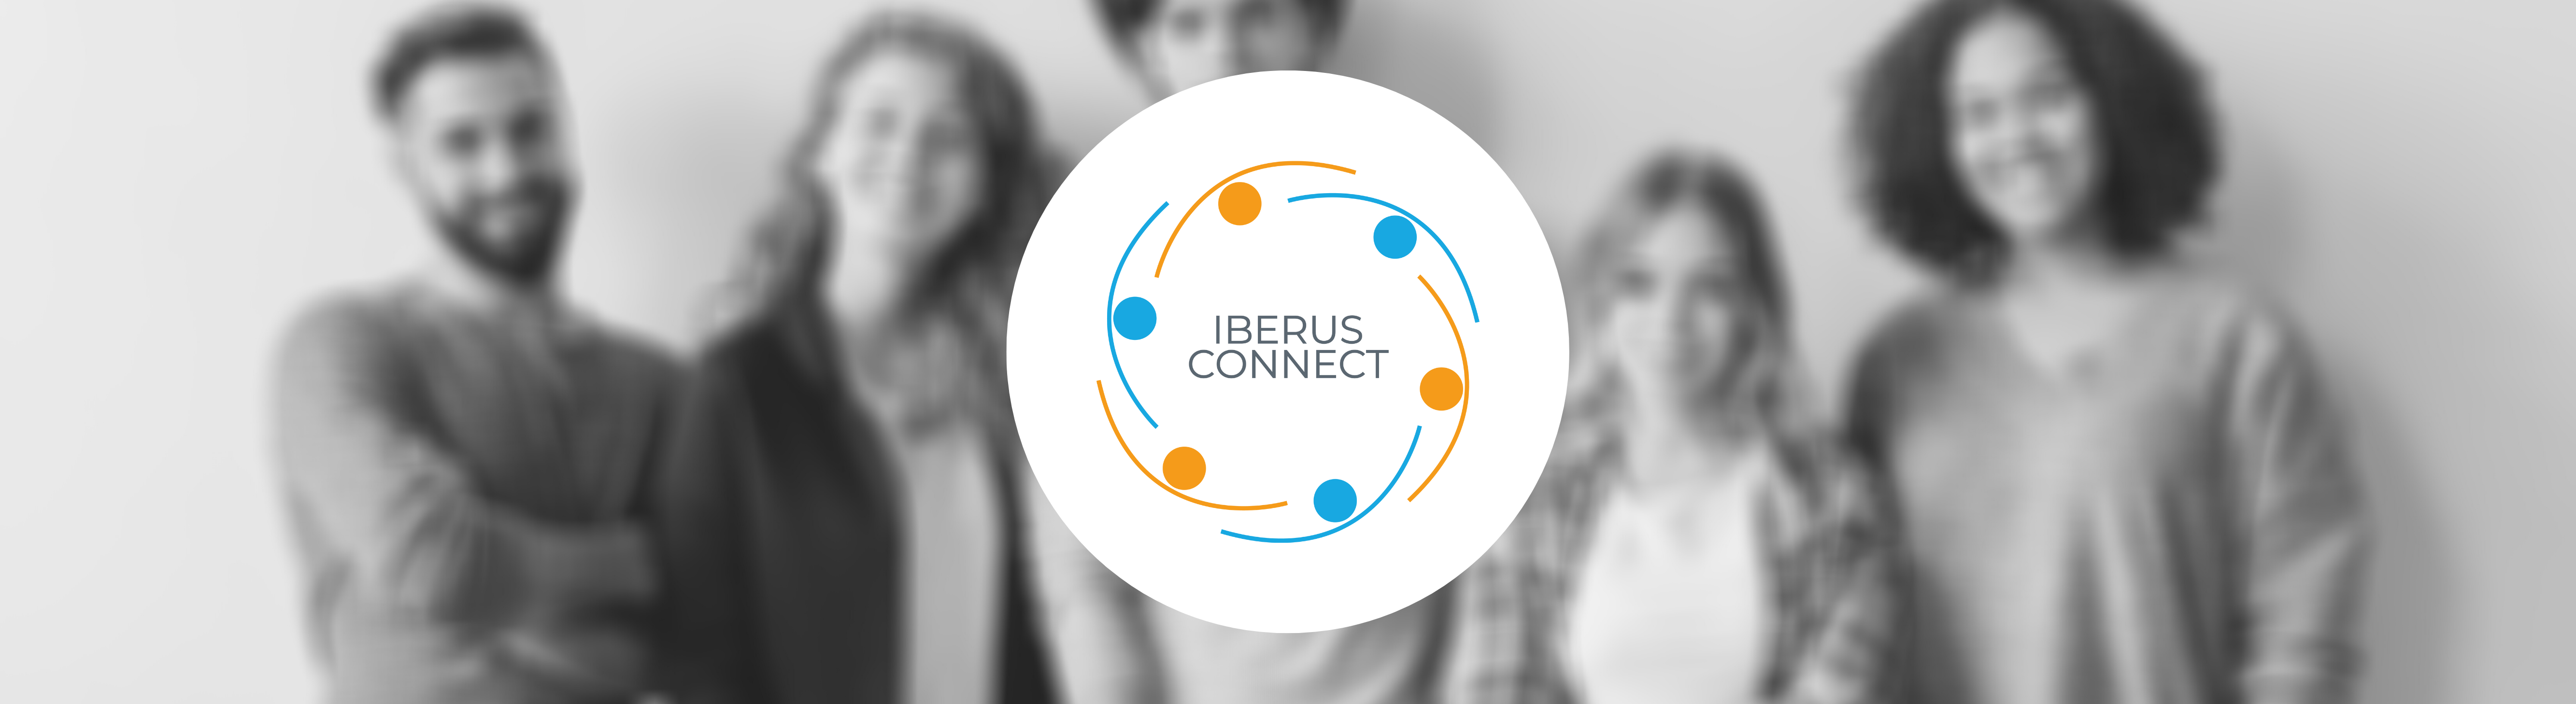 https://www.campusiberus.es/iberus-connect/